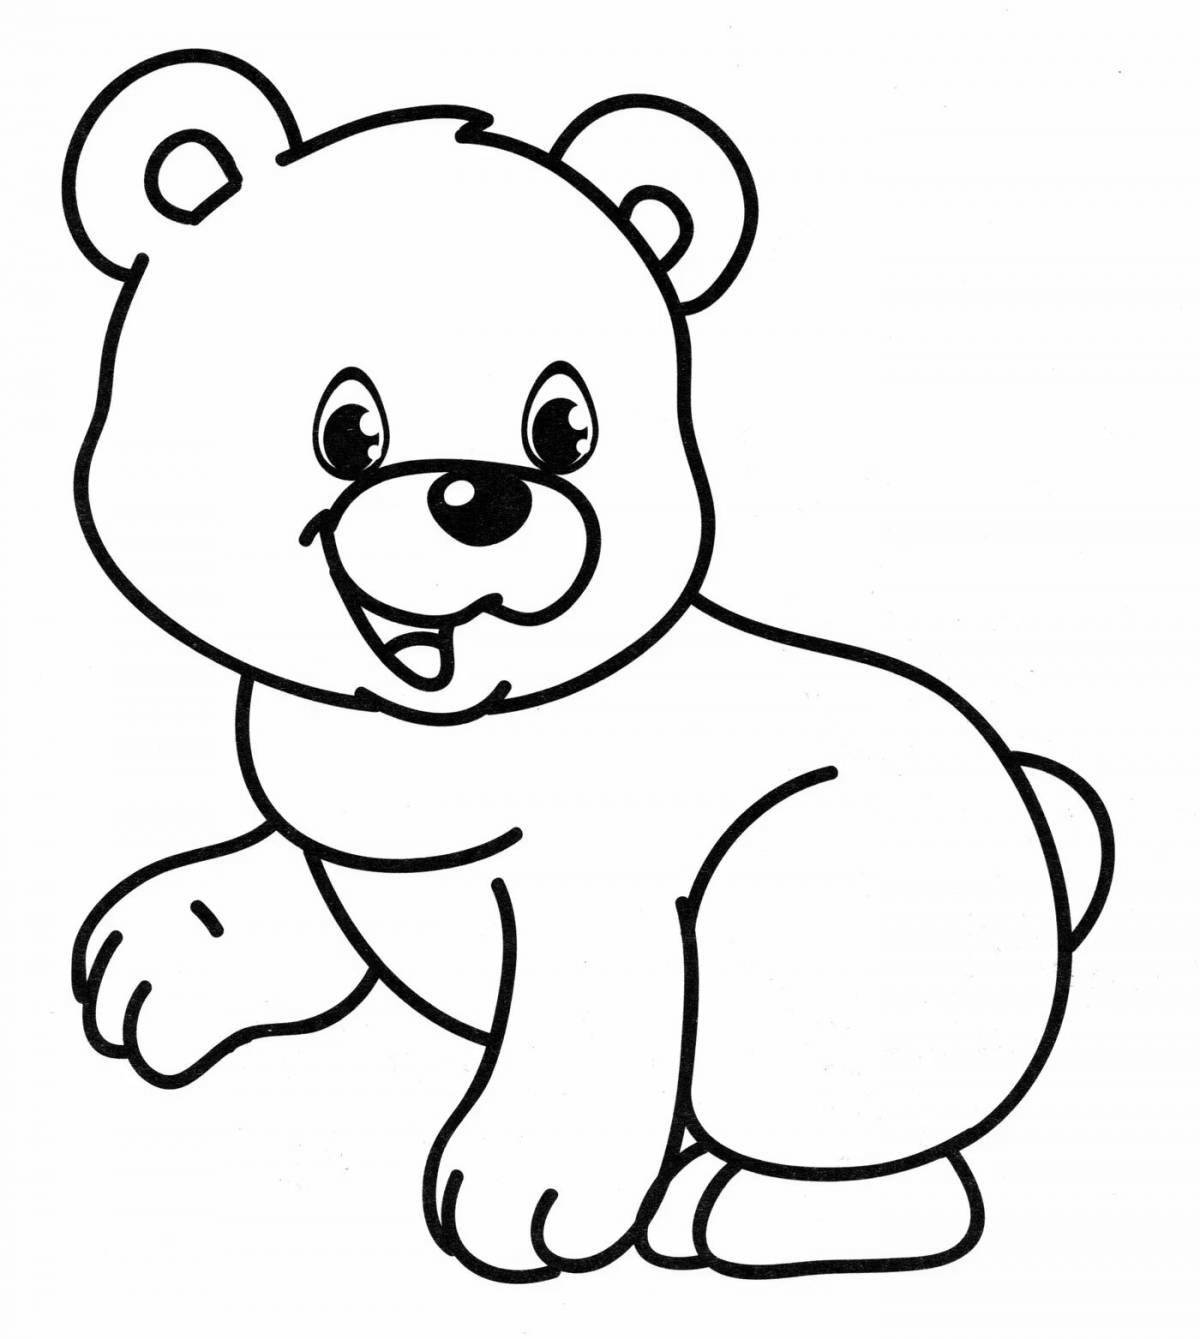 Cute teddy bear drawing for kids